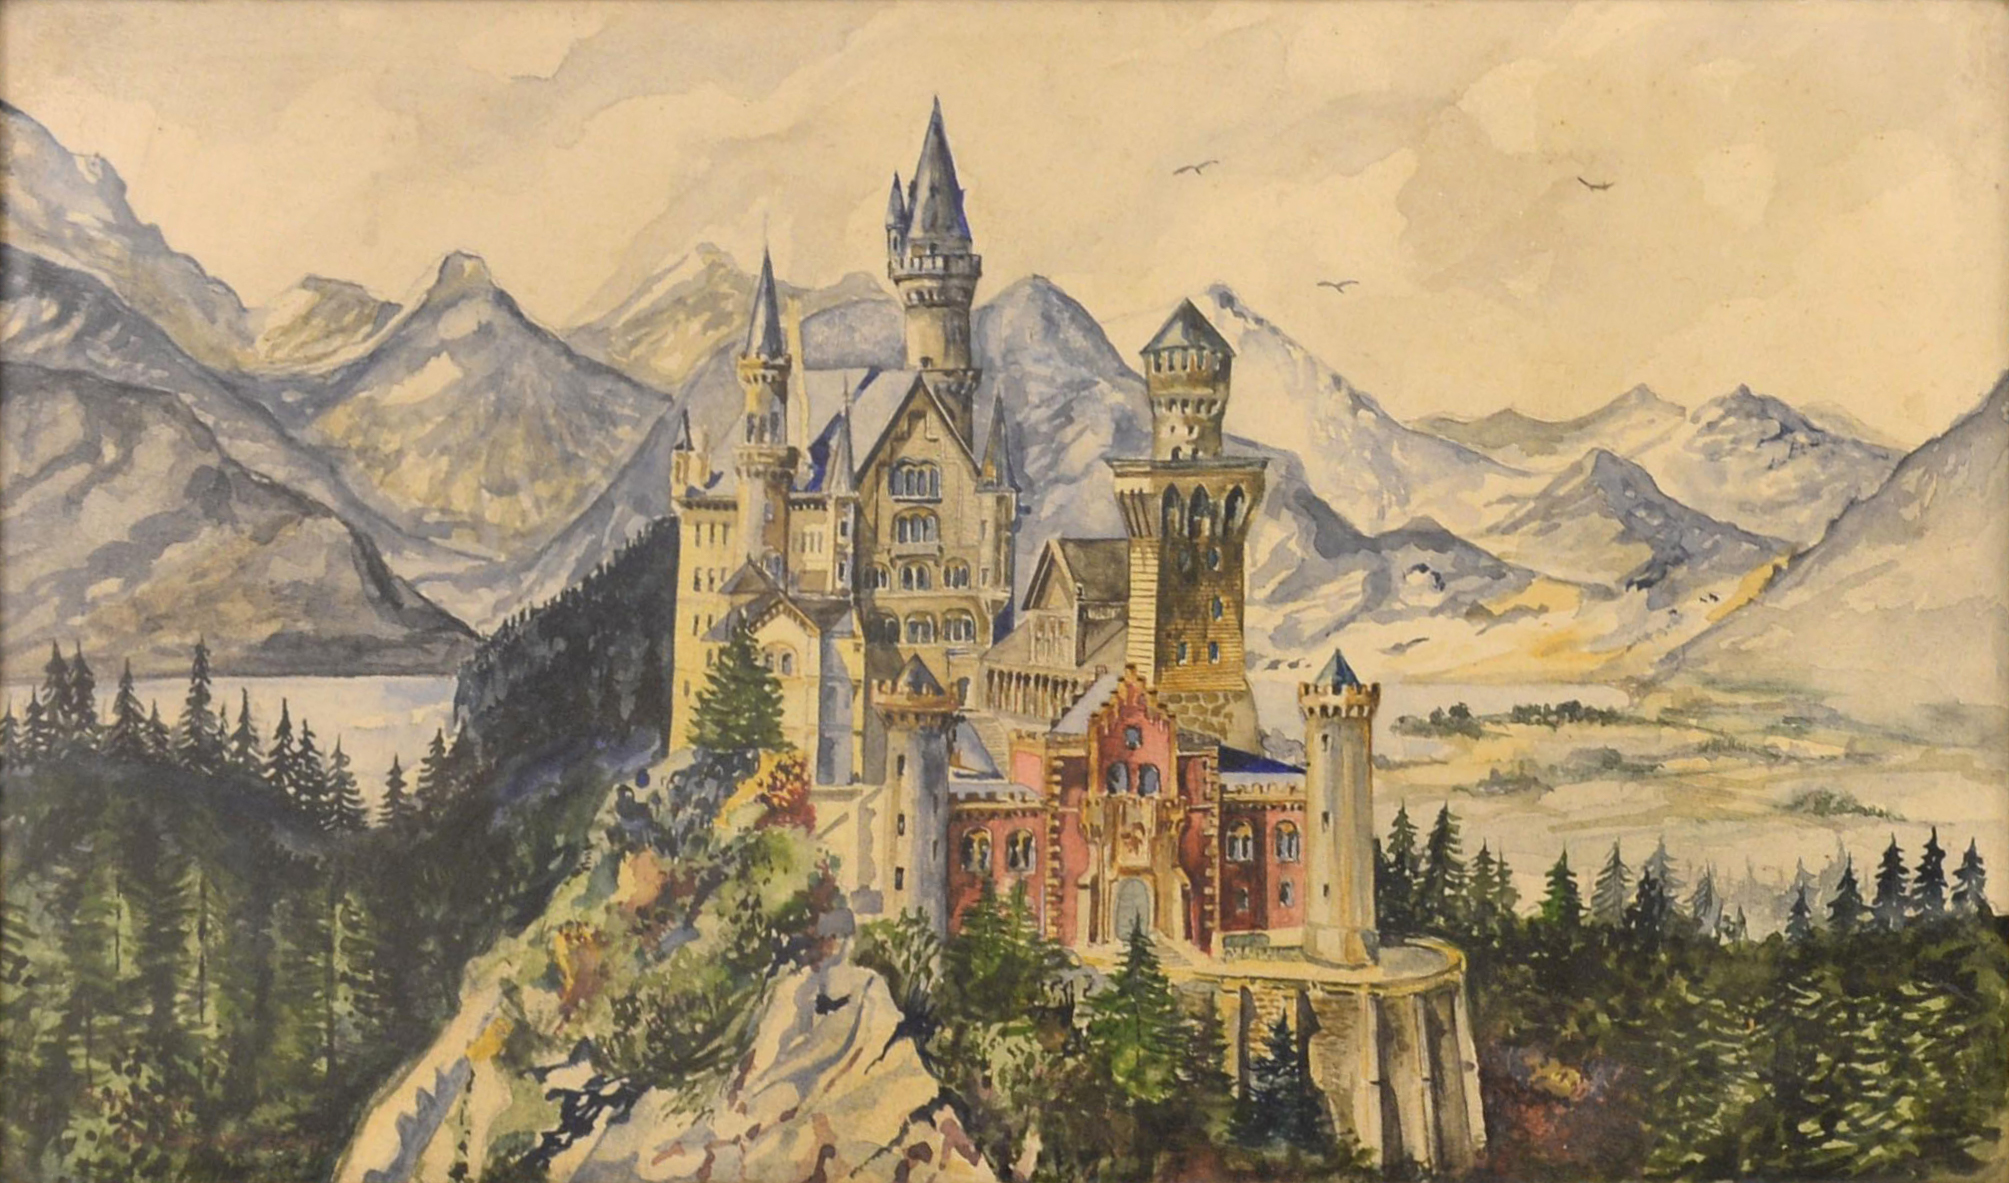 General 2009x1183 artwork painting fantasy castle castle forest mountains lake Neuschwanstein Castle